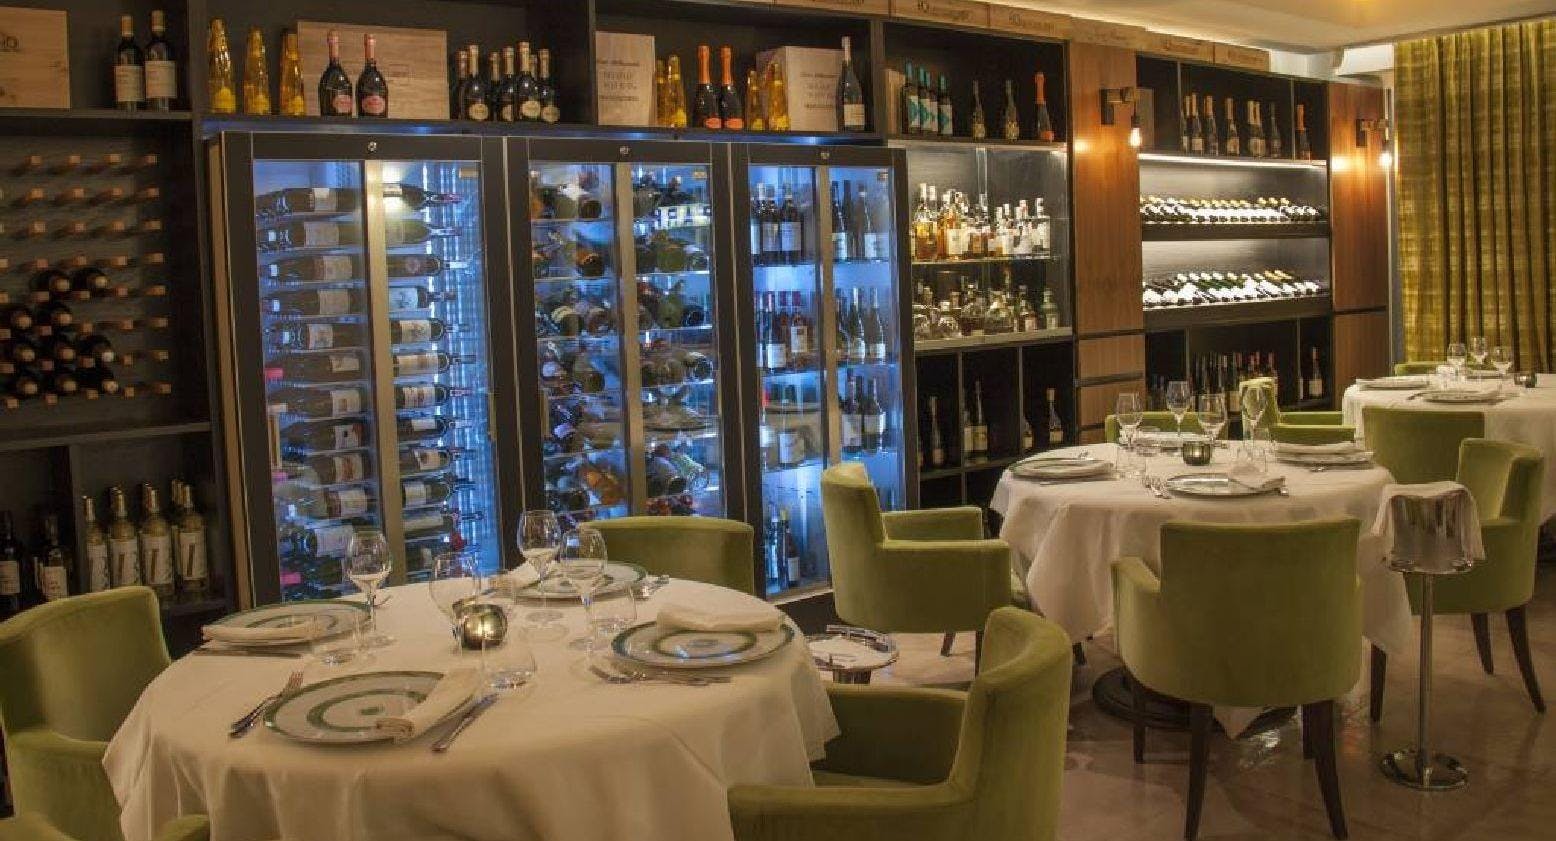 Photo of restaurant Imbarco 10 in Garibaldi, Milan